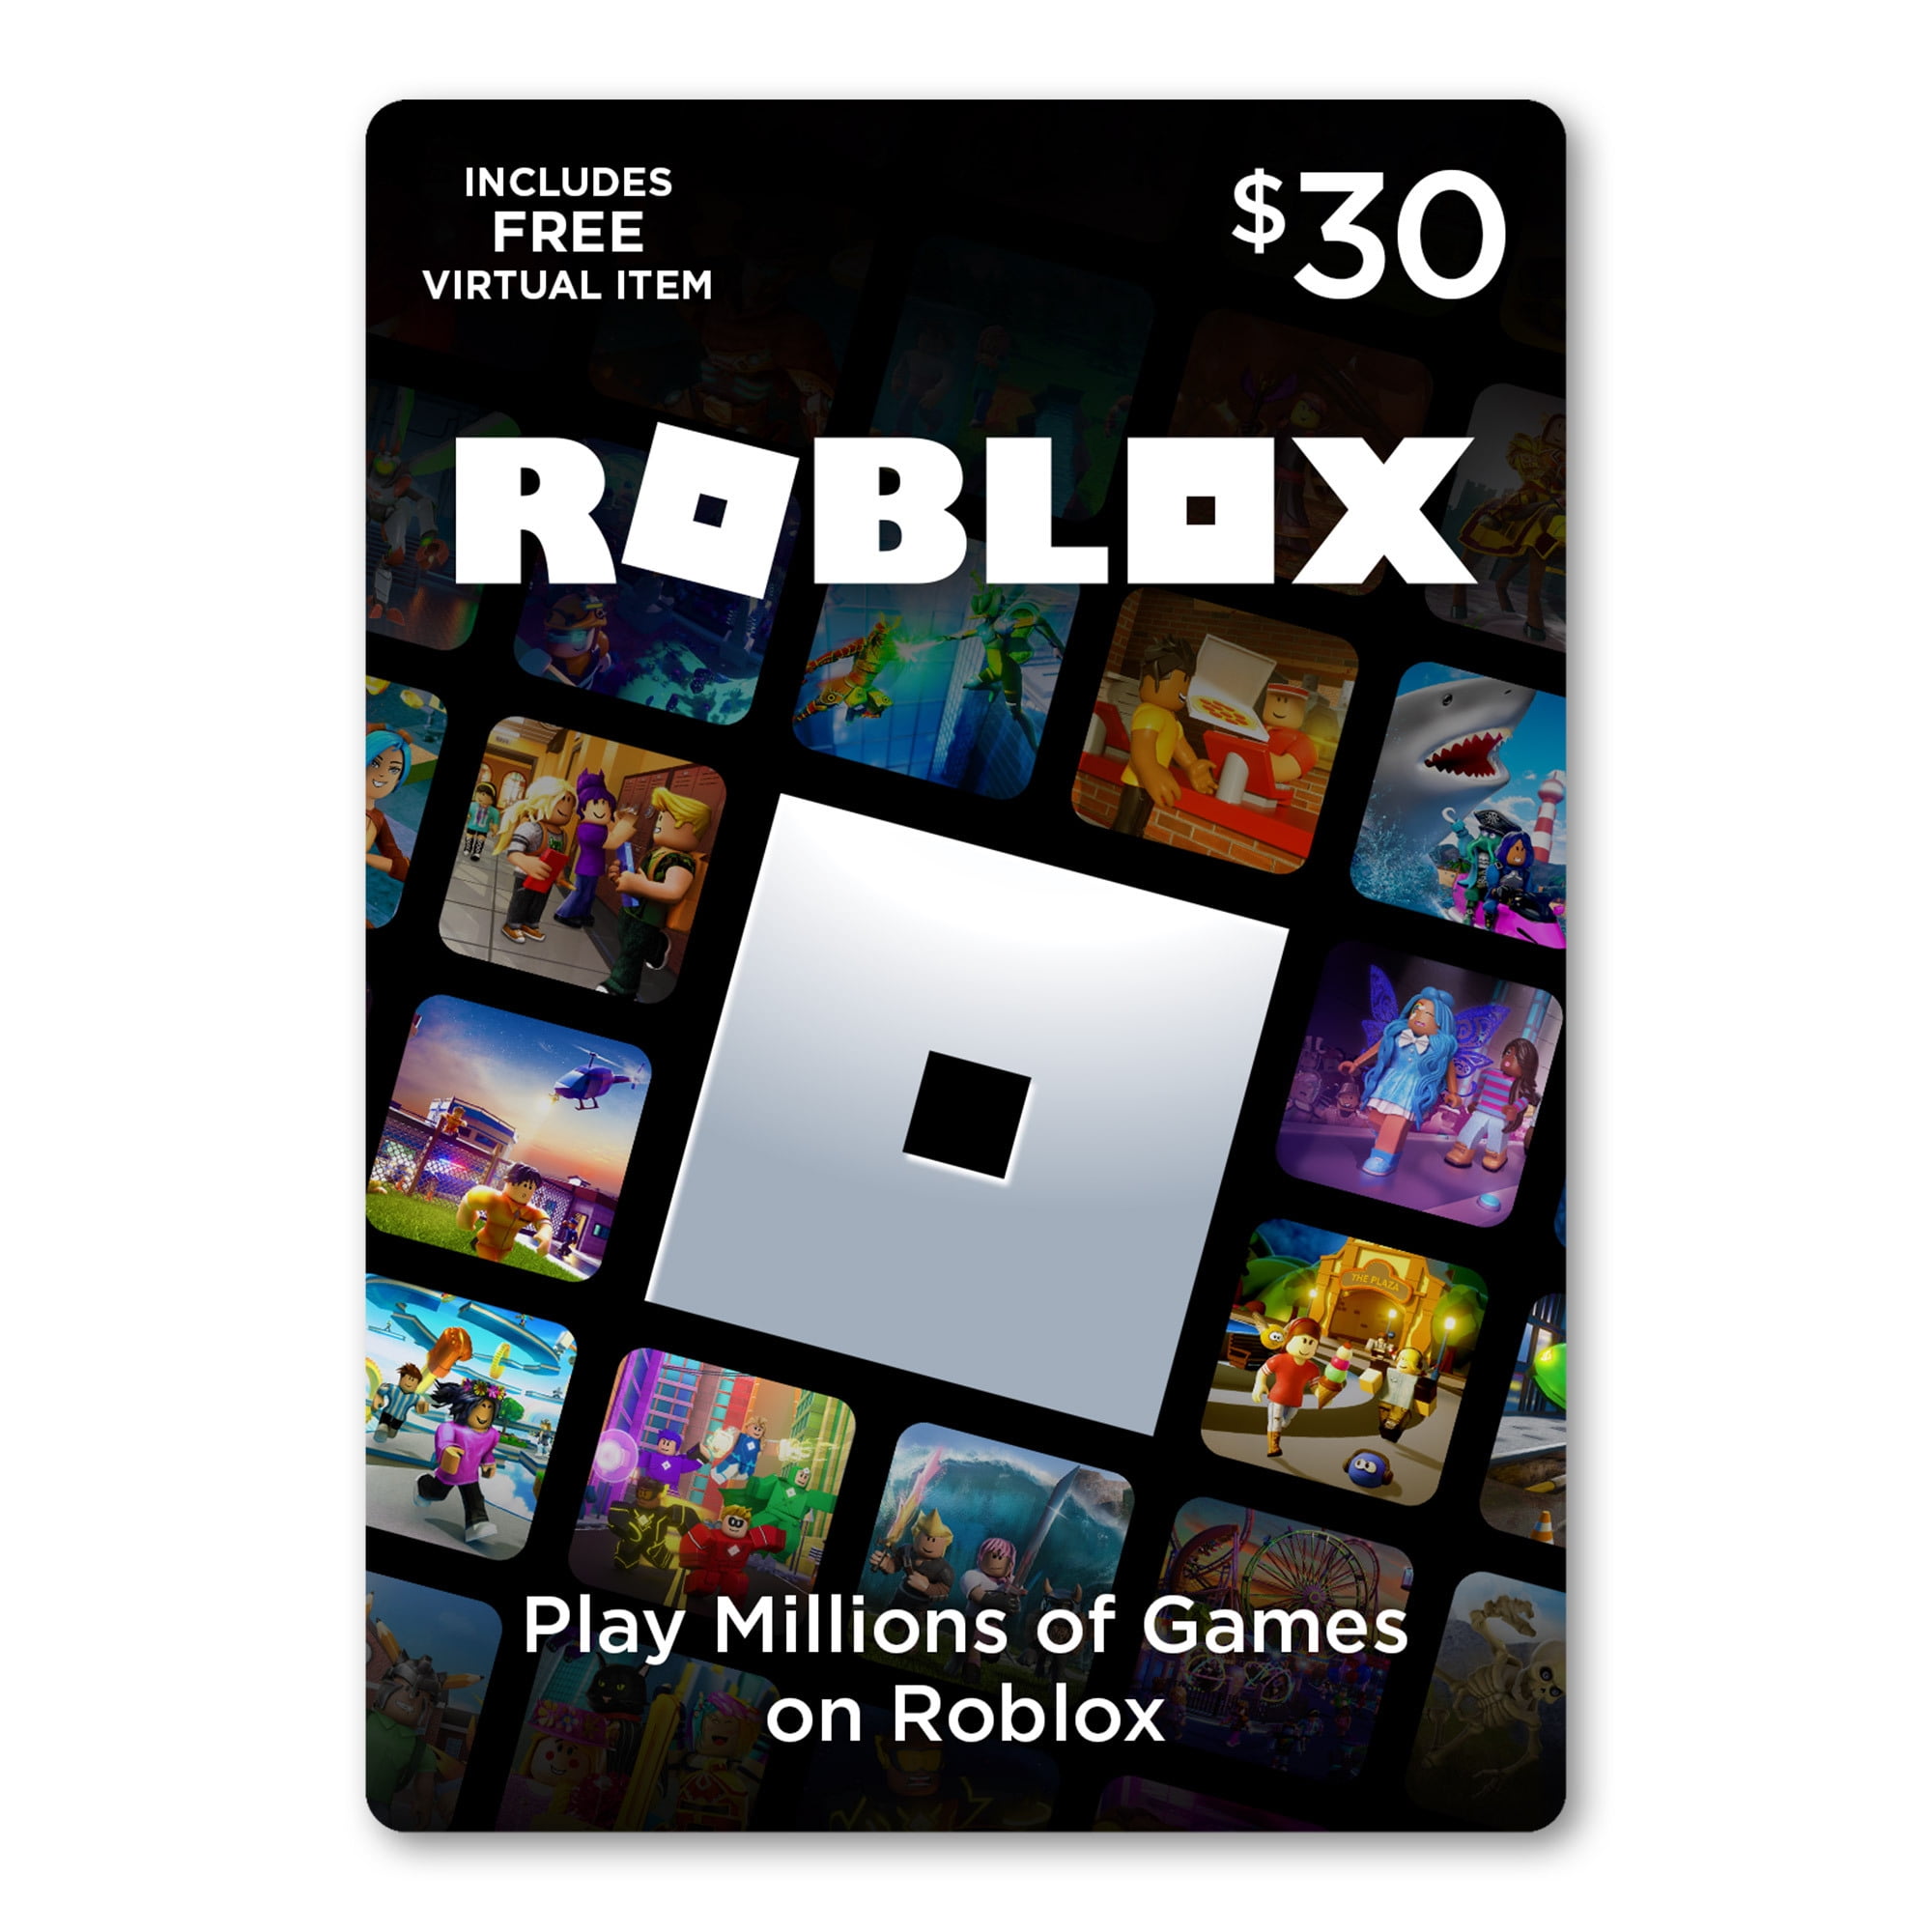 Roblox 30 Digital Gift Card Includes Exclusive Virtual Item Digital Download Walmart Com Walmart Com - 30 robux free